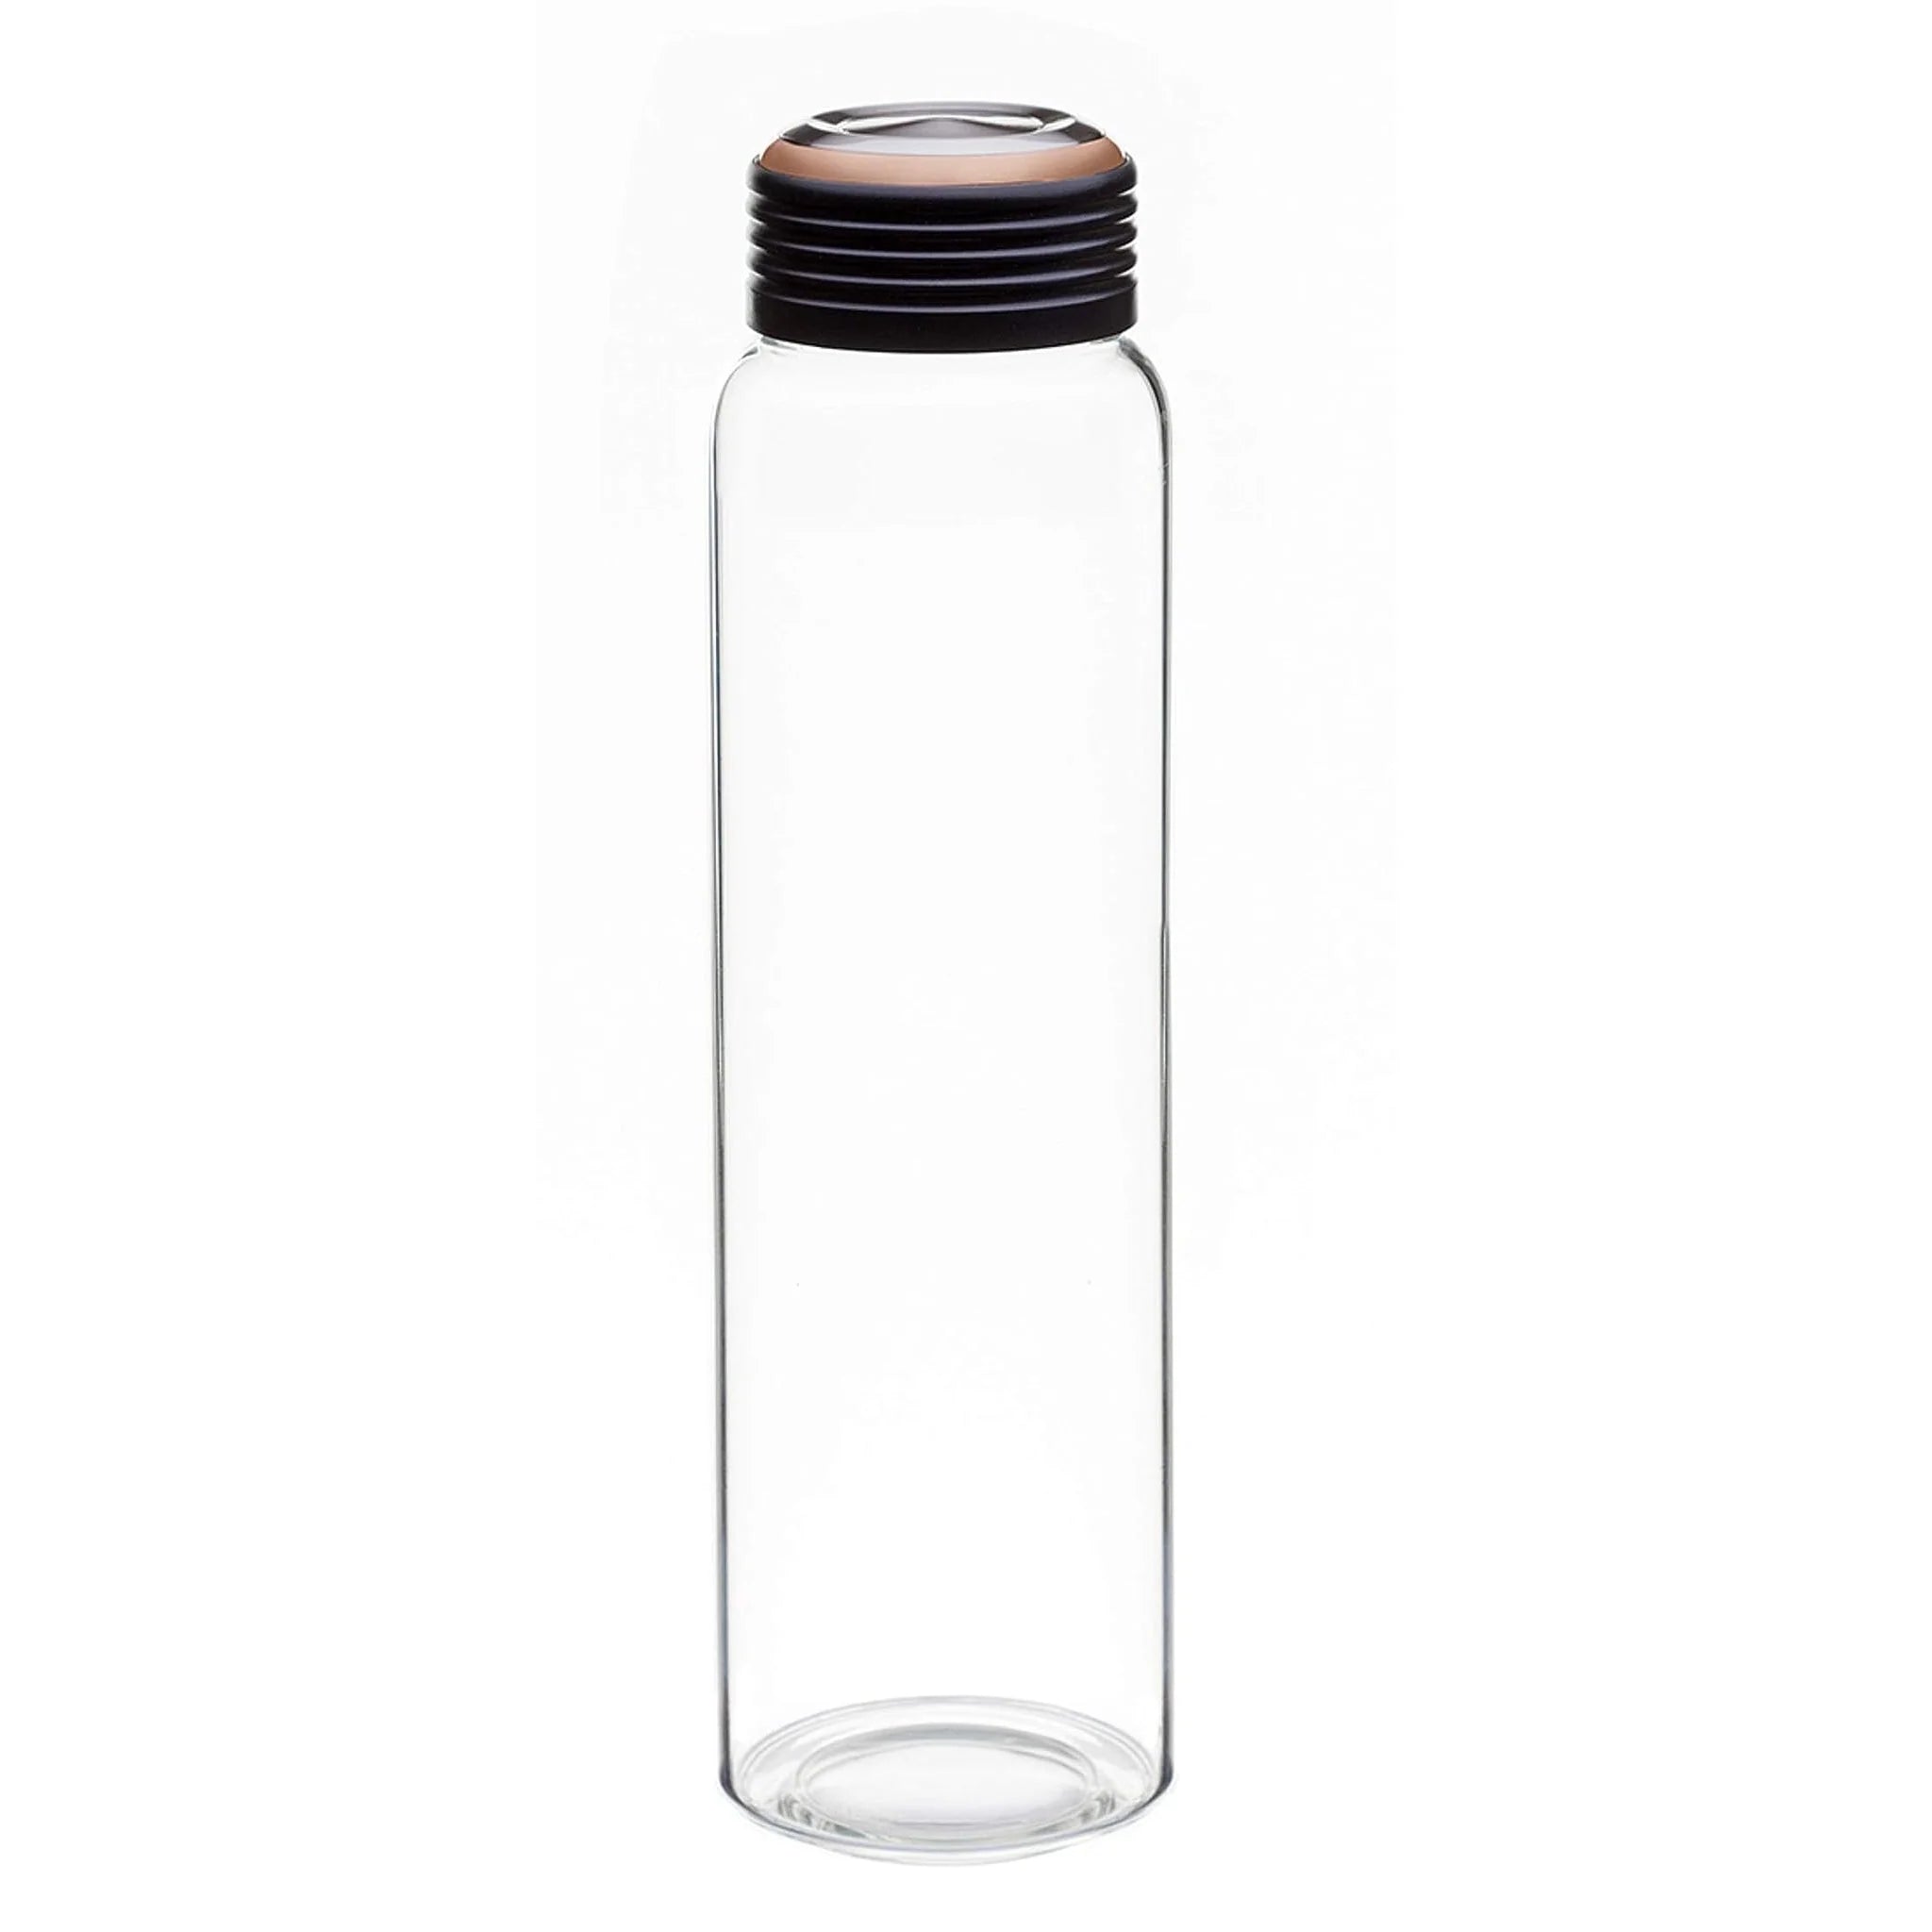 Signoraware Claro Flow Glass Bottle 1 Ltr - 1416